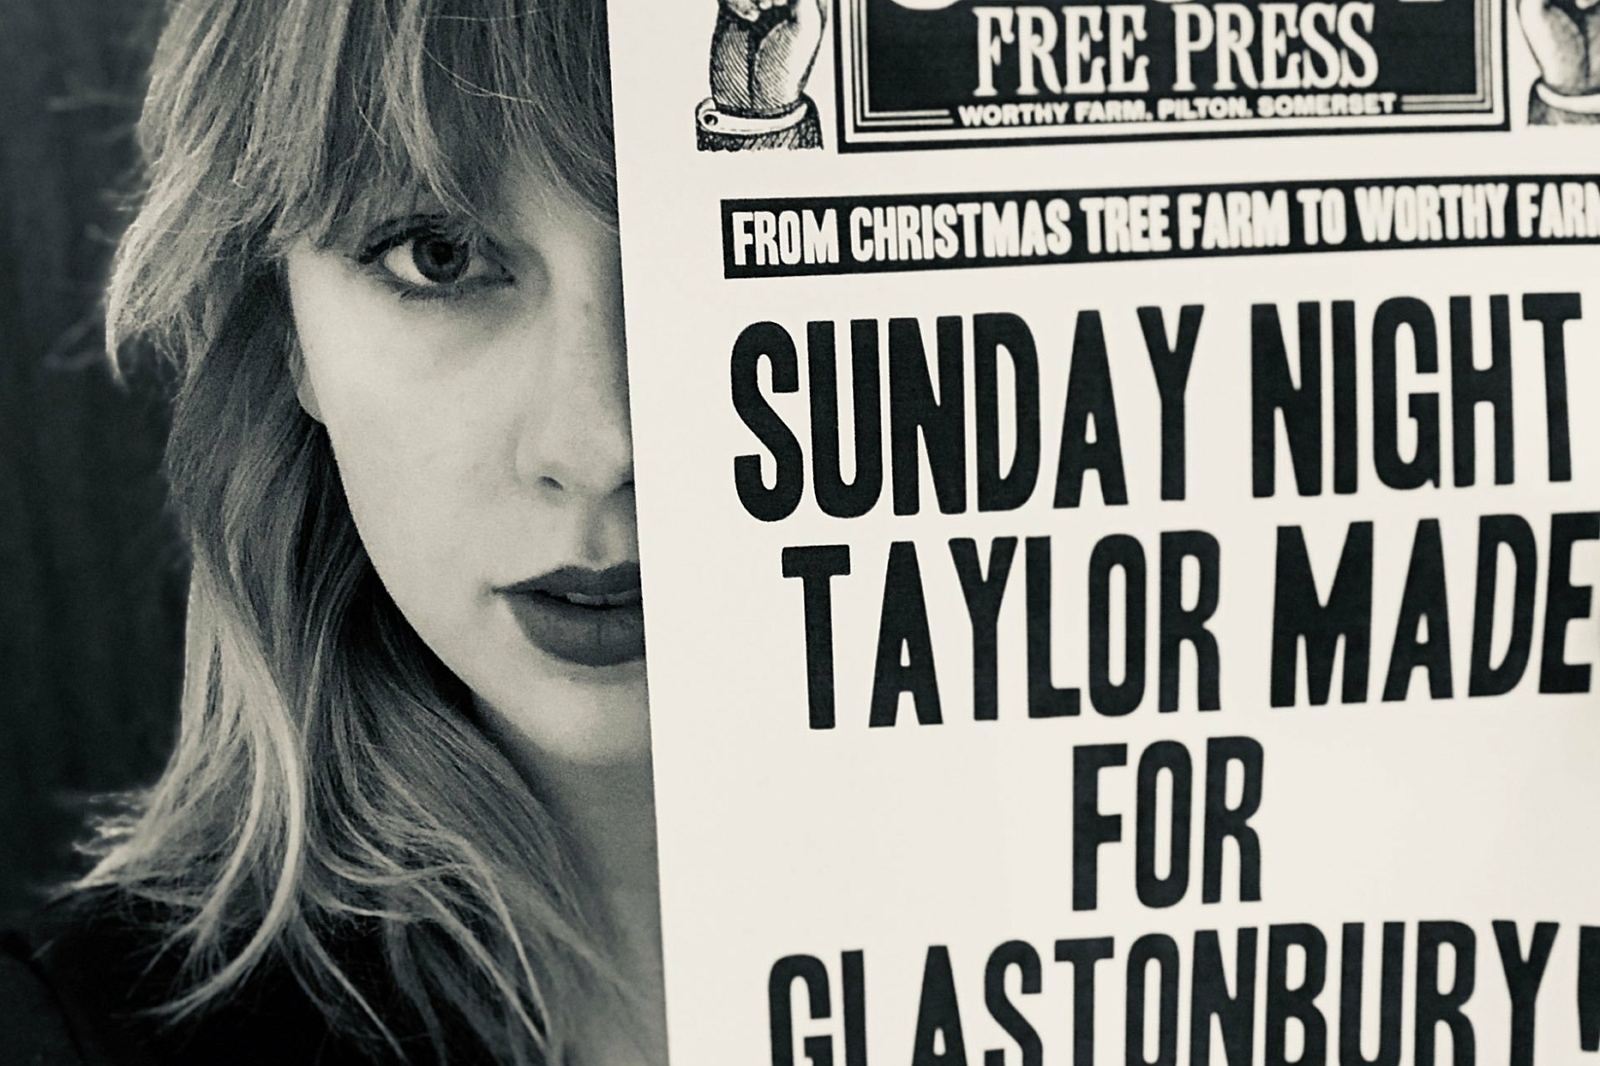 Taylor Swift to headline Glastonbury 2020